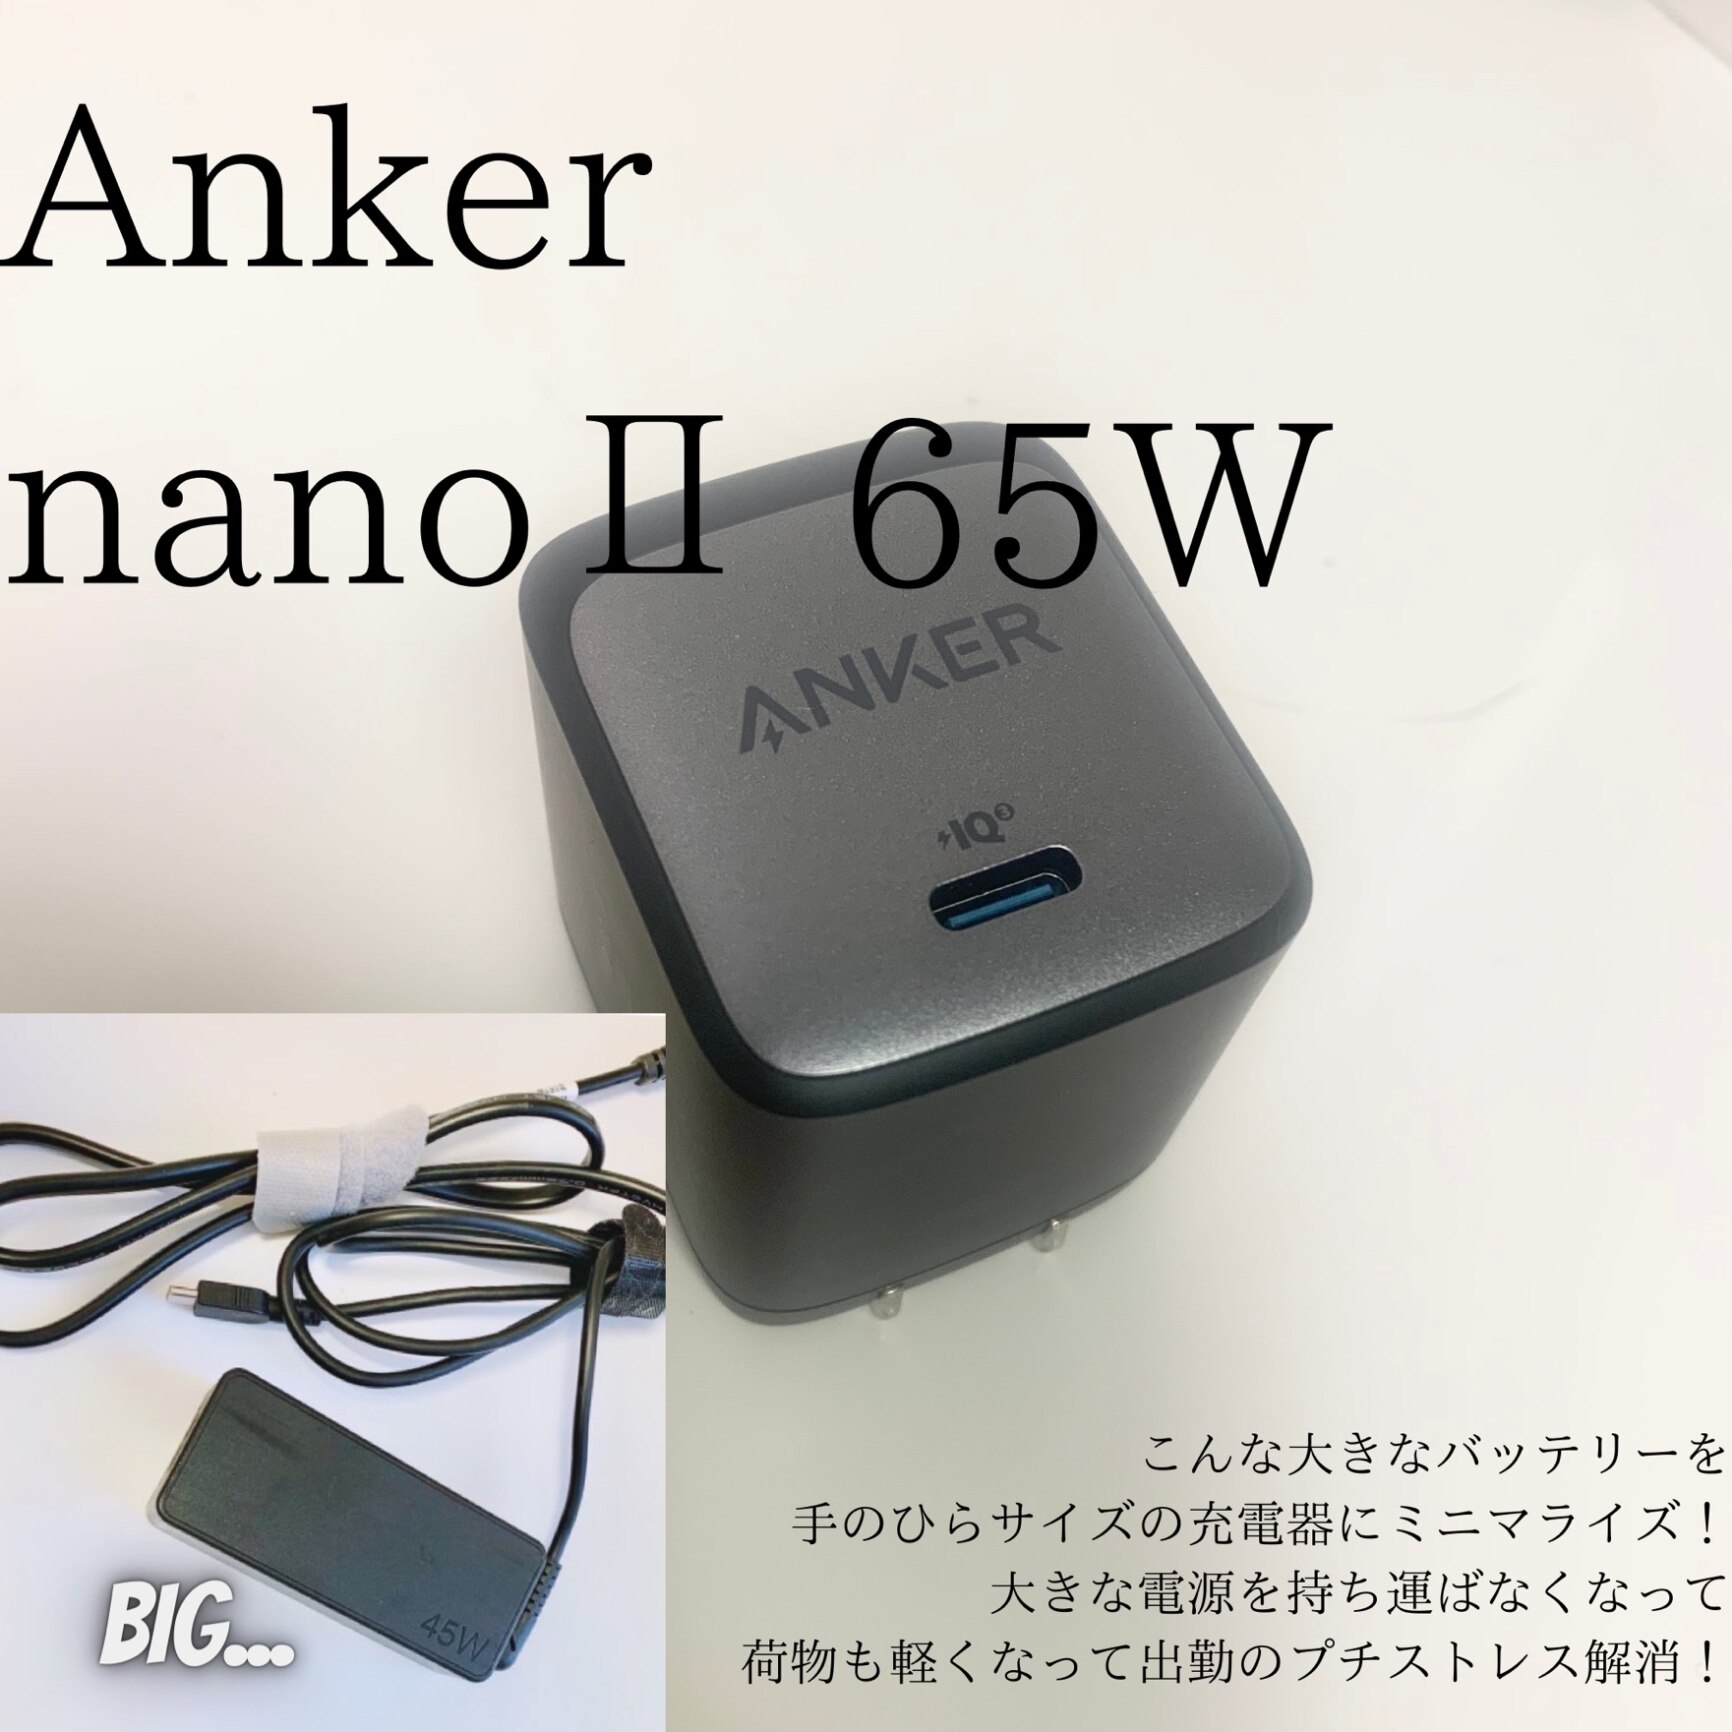 93%OFF!】 Anker Nano II 65W PD 充電器 USB-C MacBook PD対応Windows